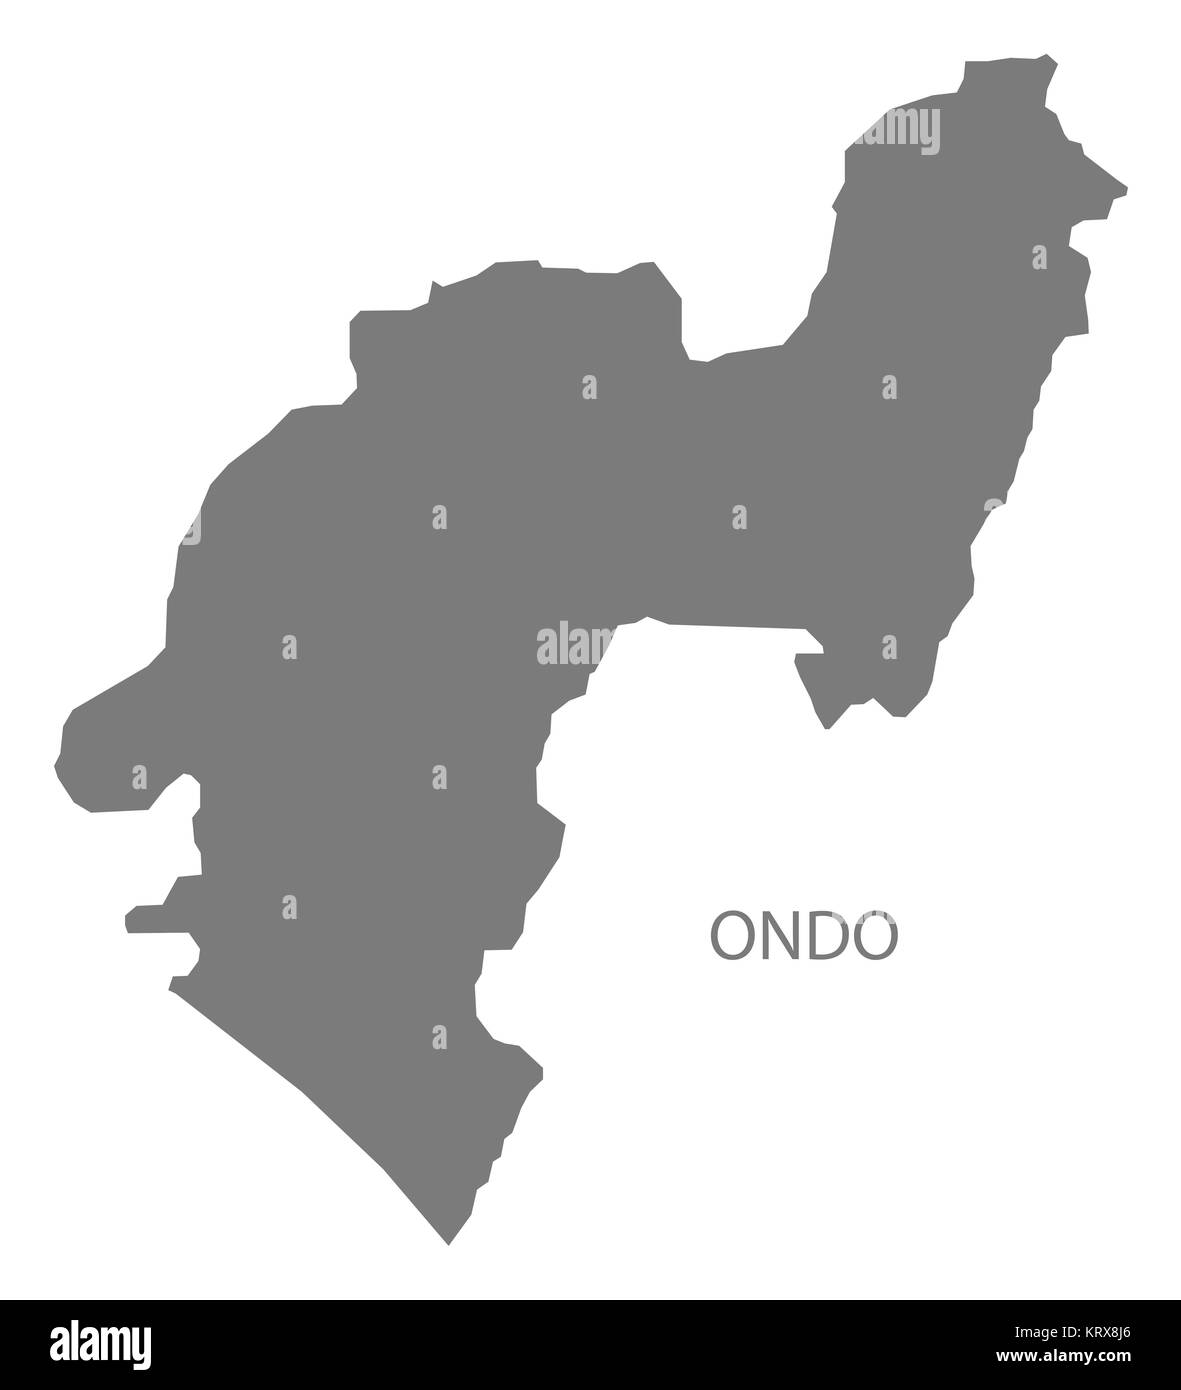 Ondo Nigeria Map grey Stock Photo